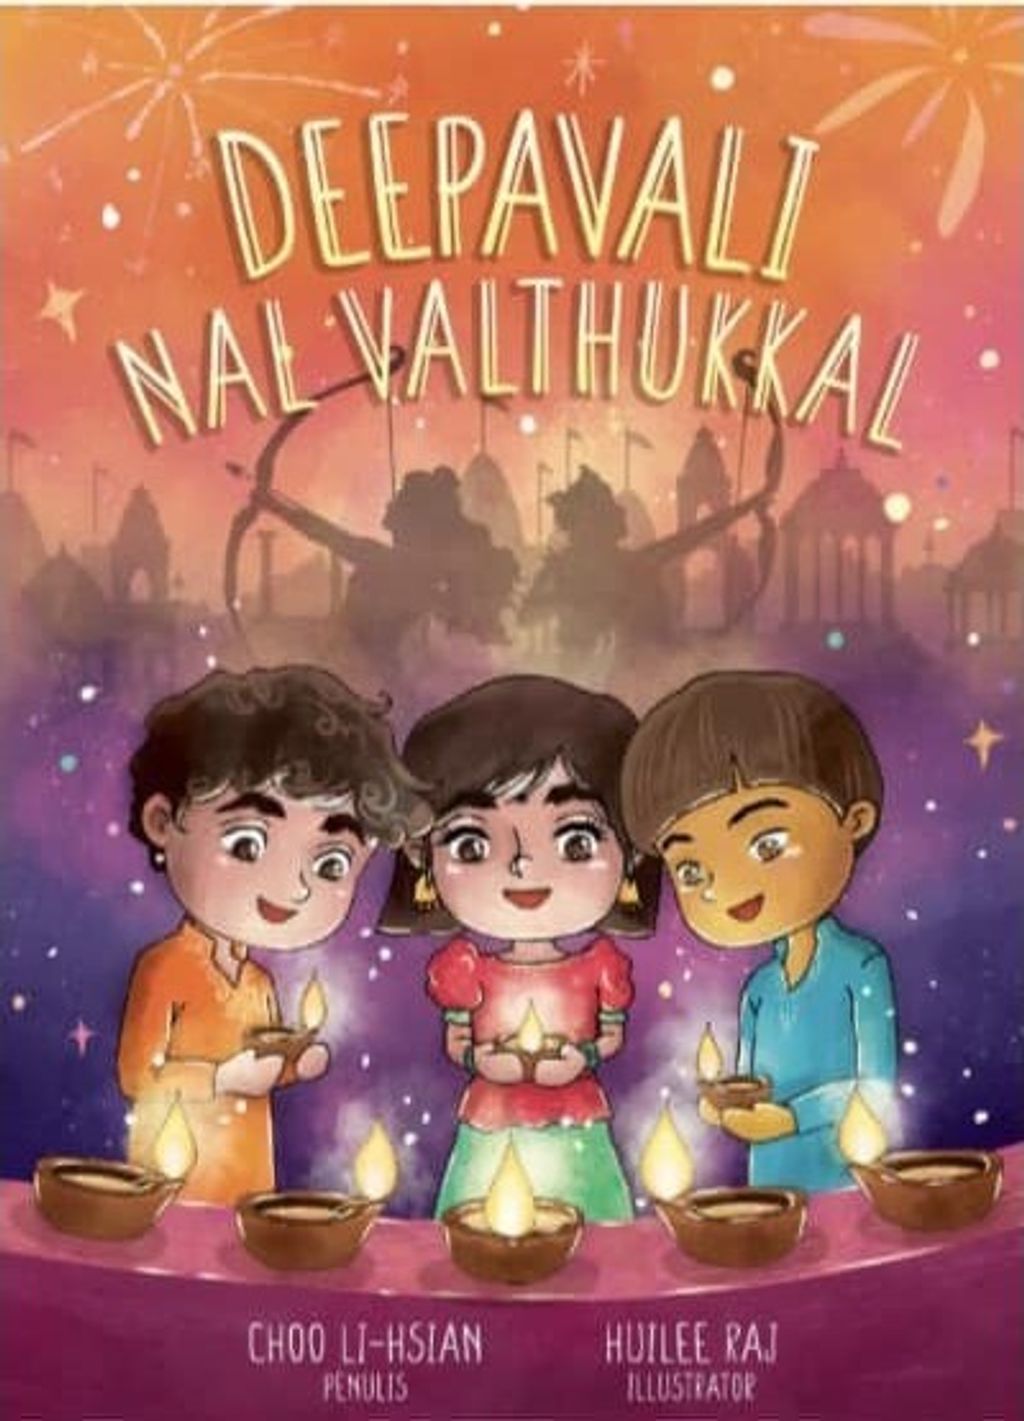 Deepavali Nal Valthukkal